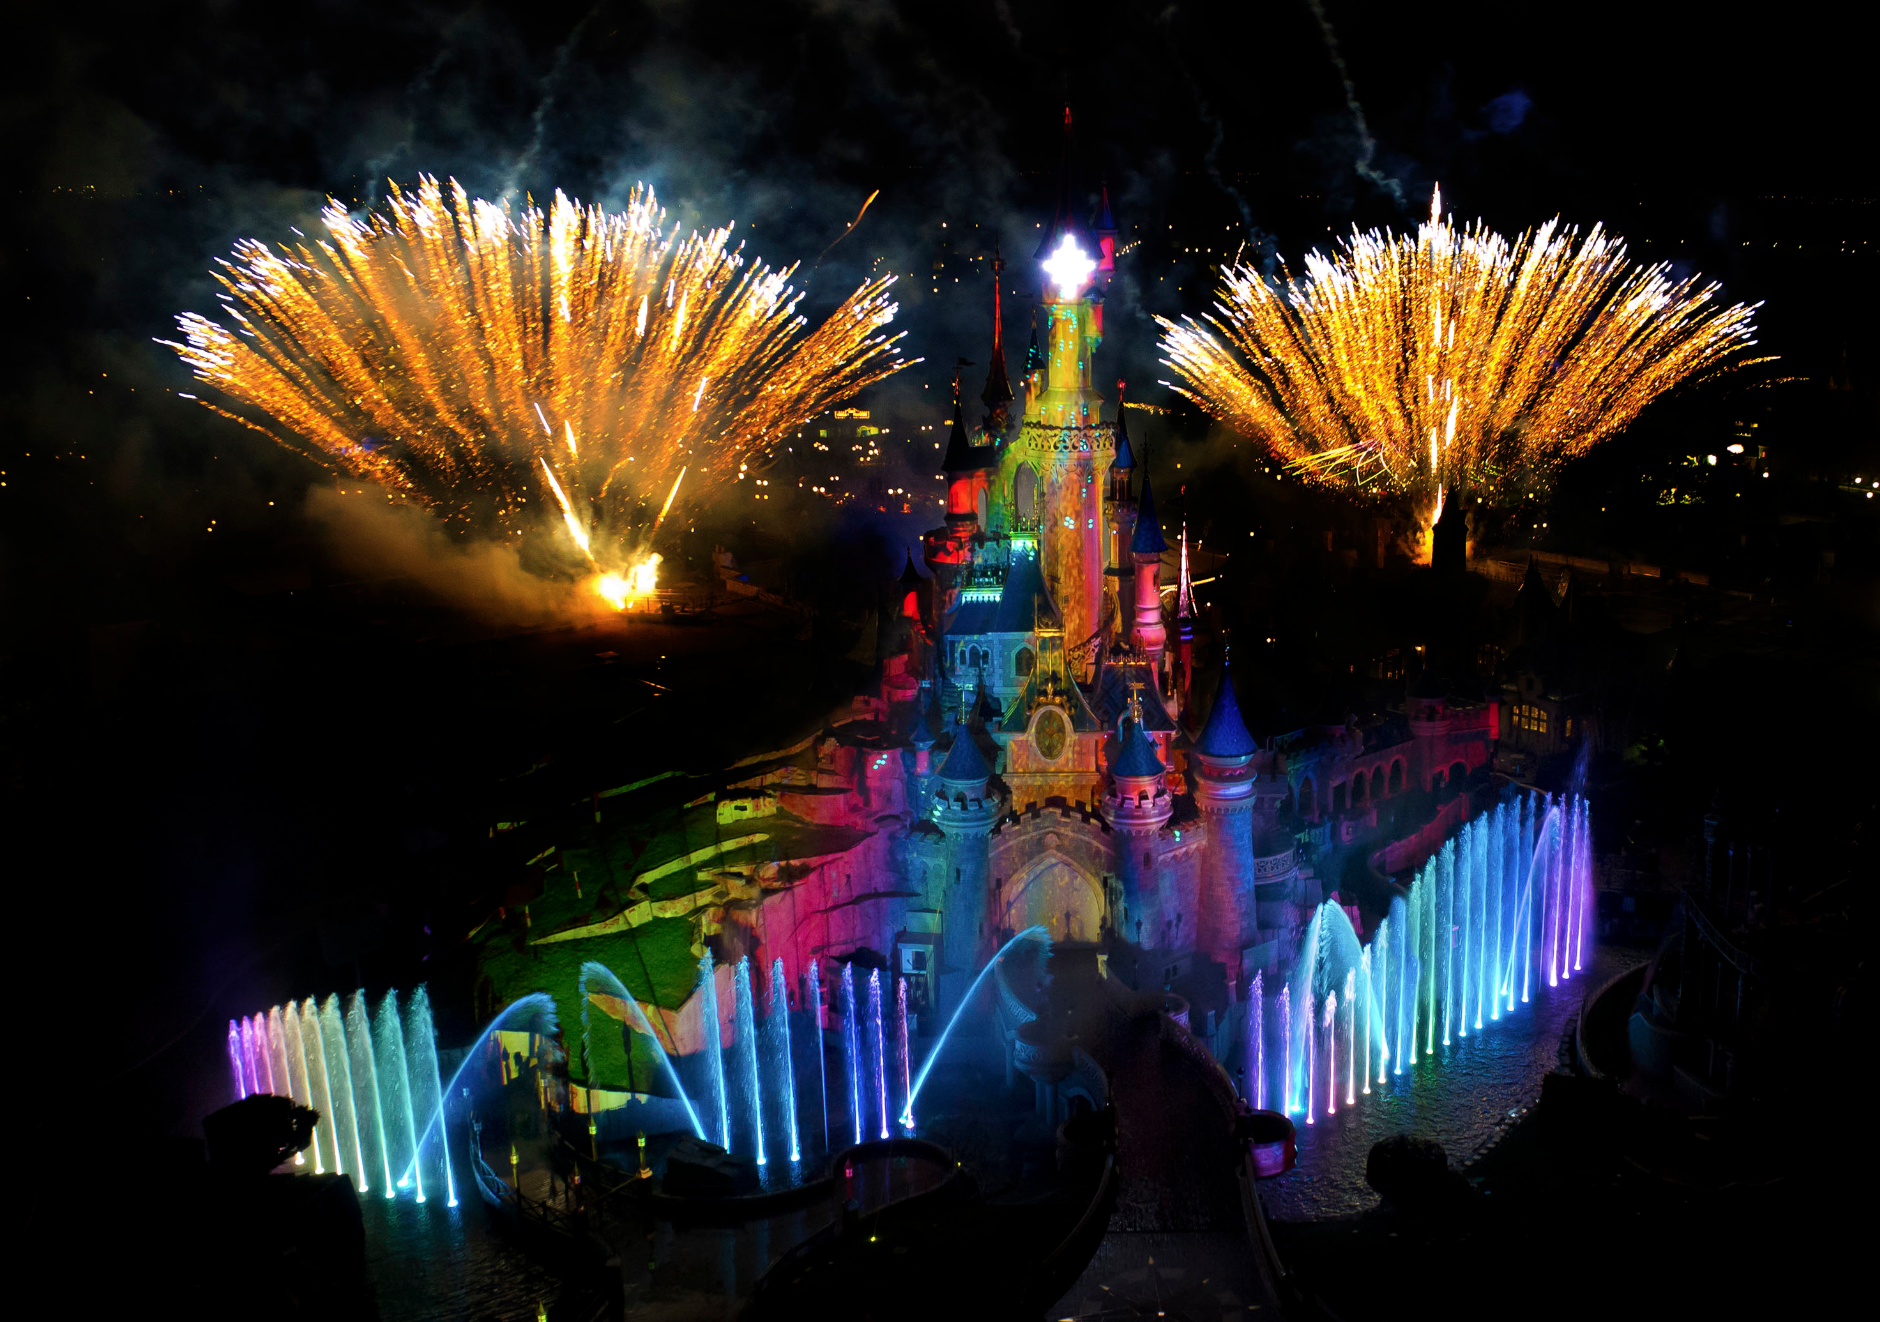 Disneyland Paris Disney Dreams spectacle night time show spectacular